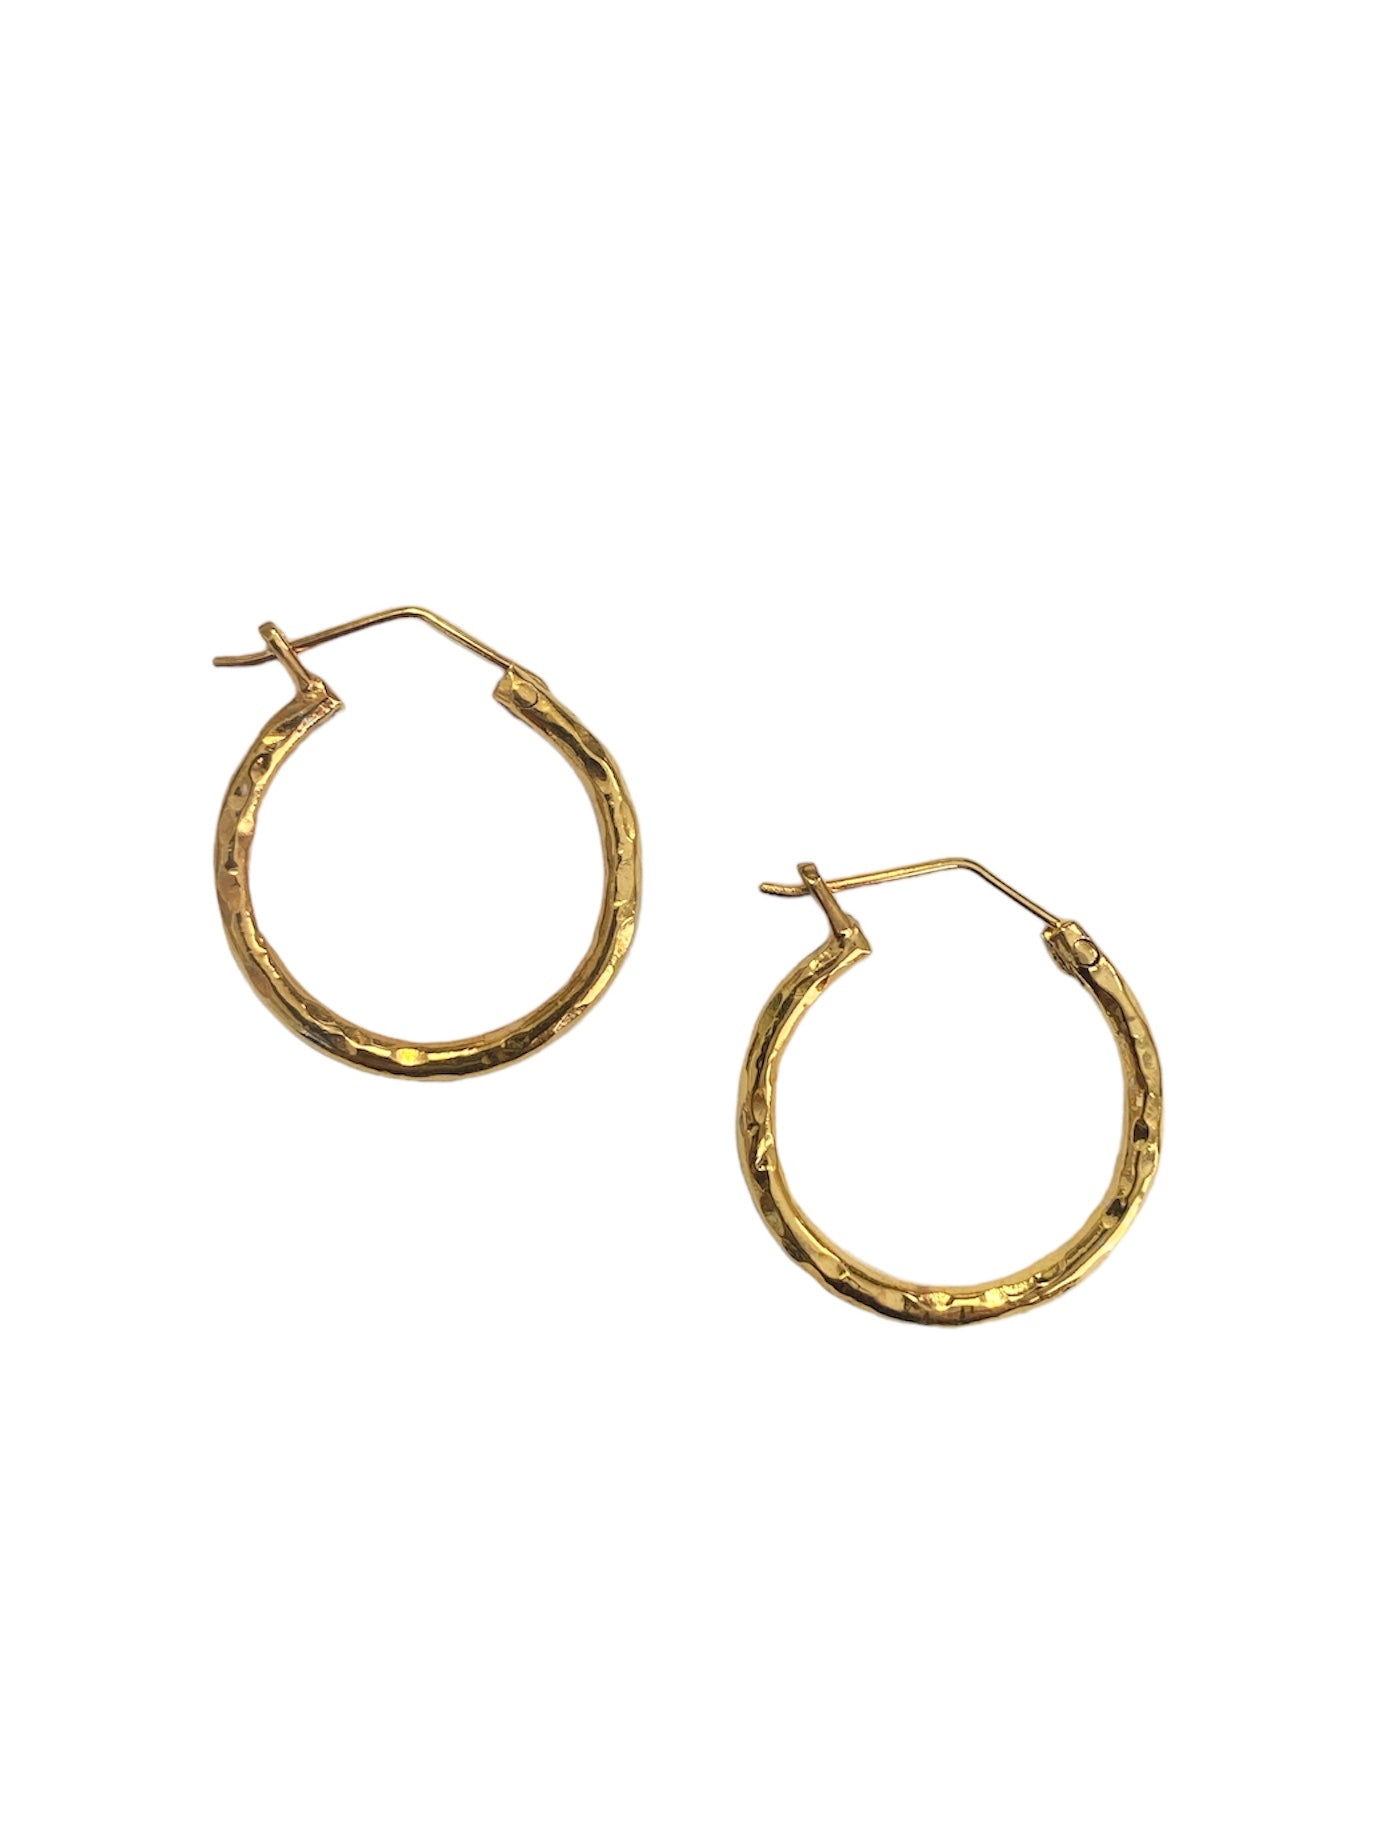 Nyundo Gold Hoop Earrings- Made in Kenya